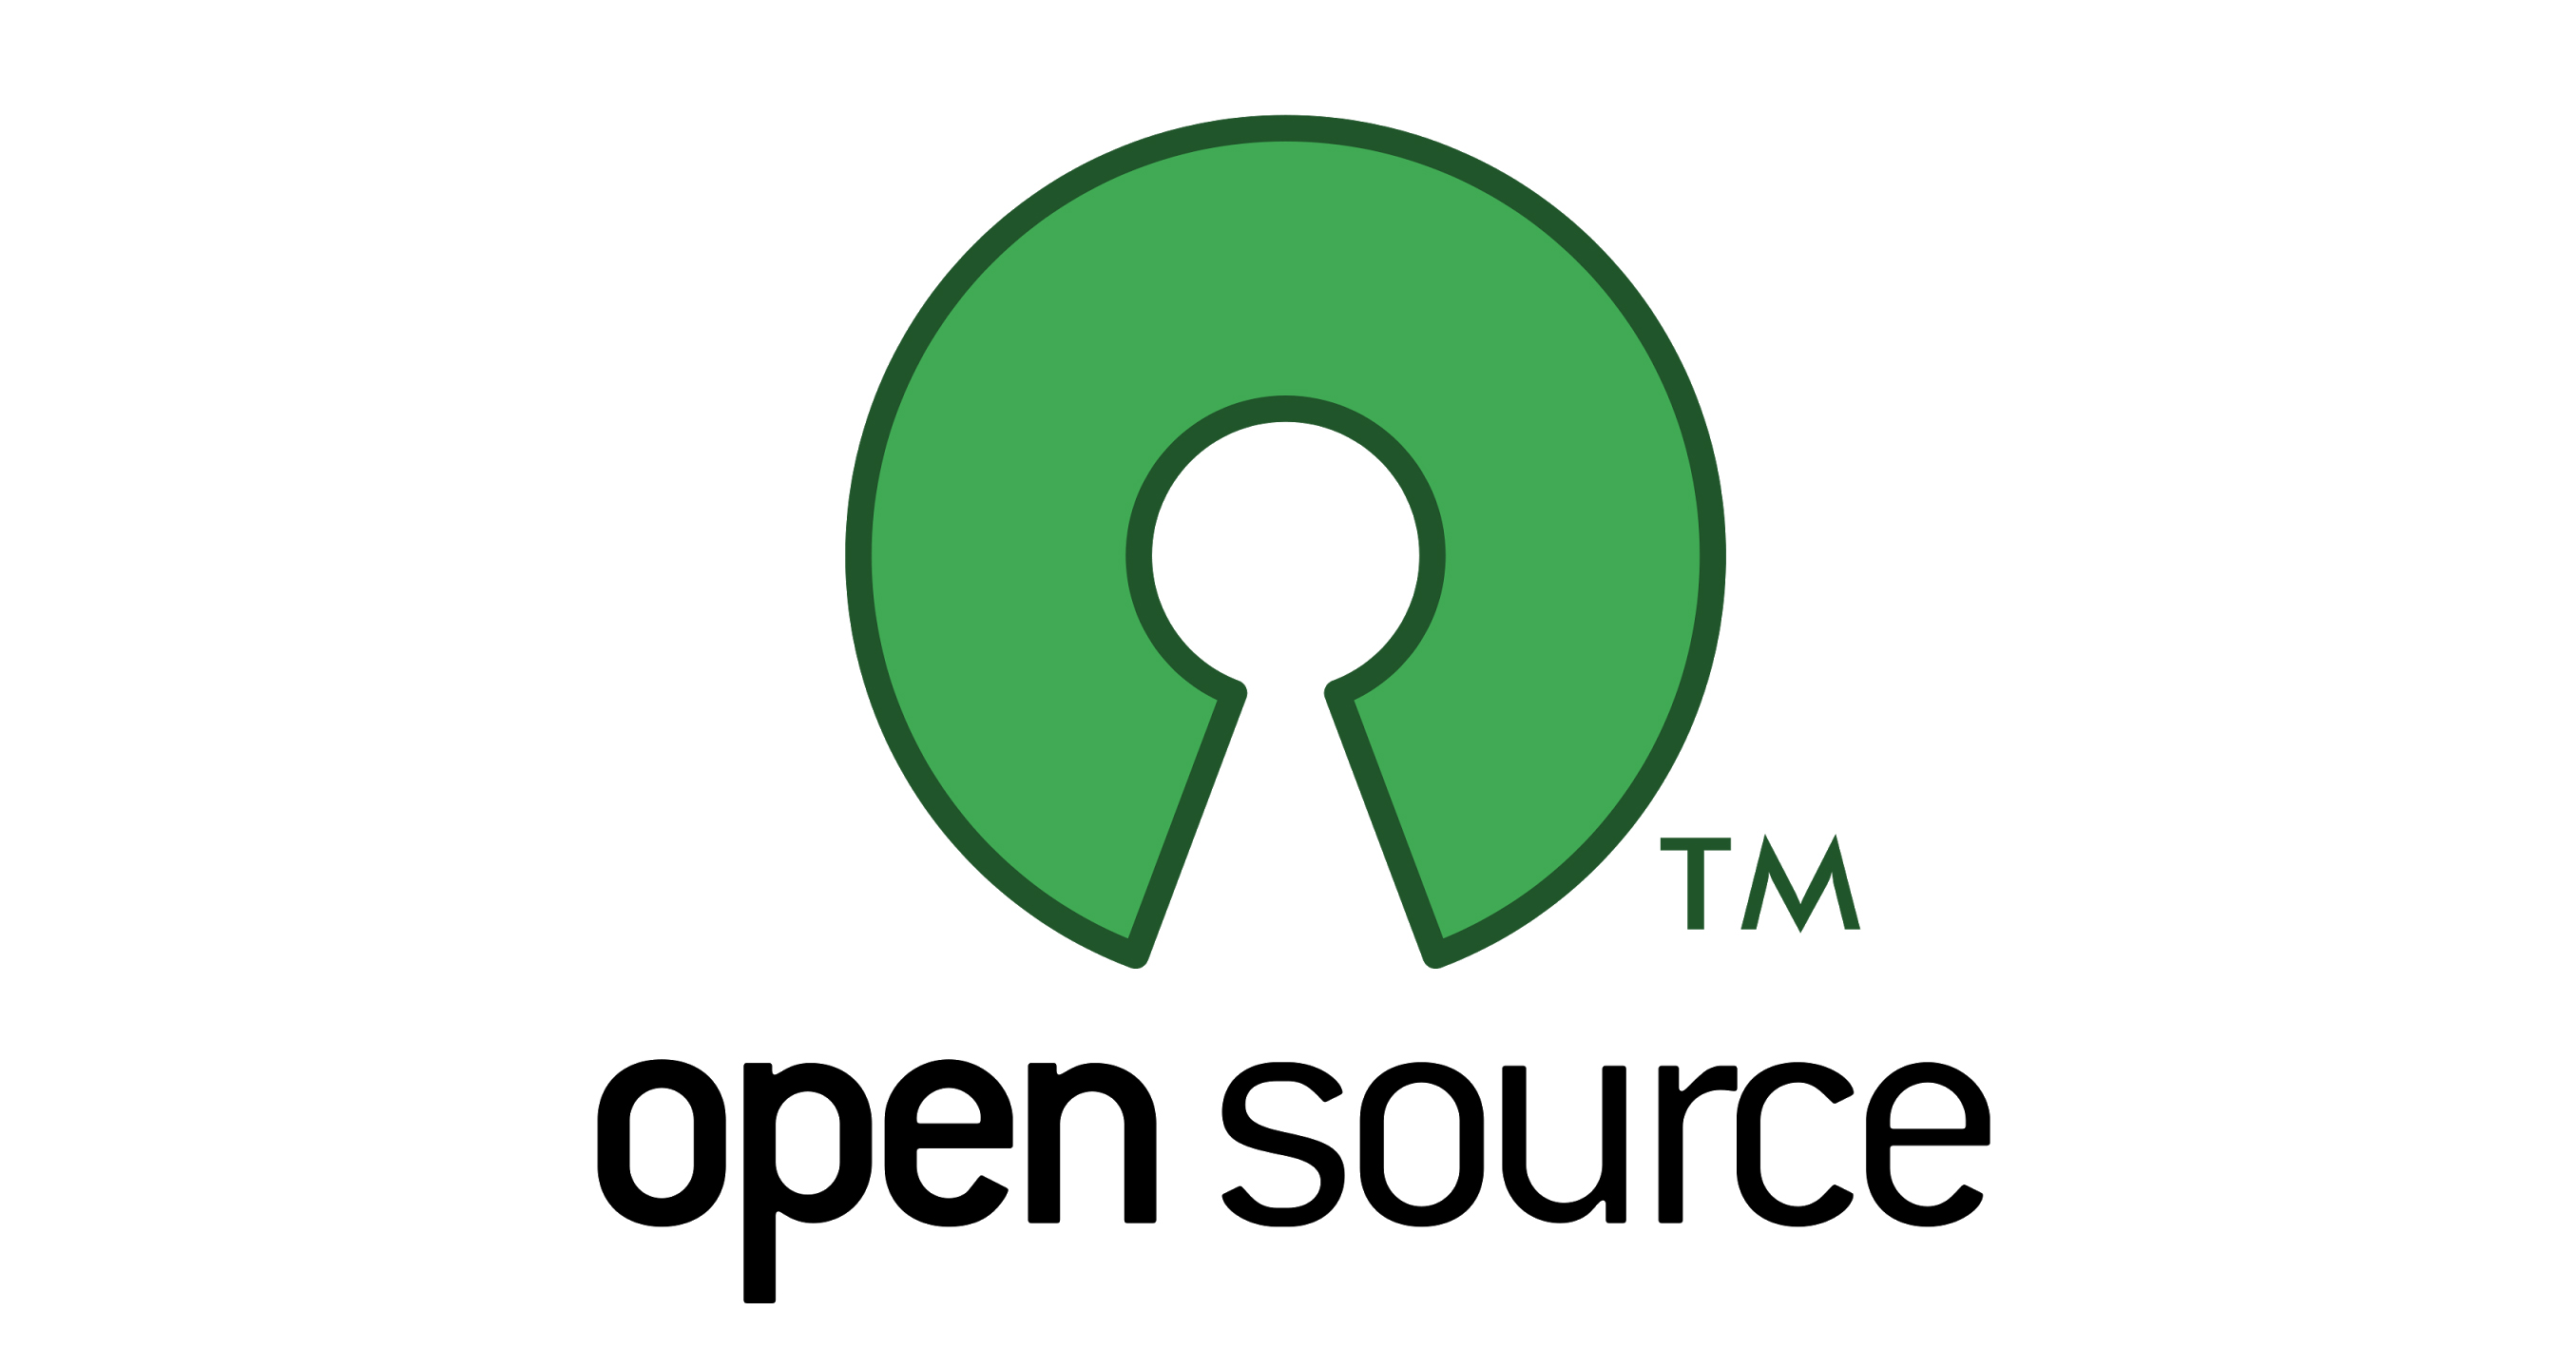 OSS IRIS - EasyDocsis Open Source